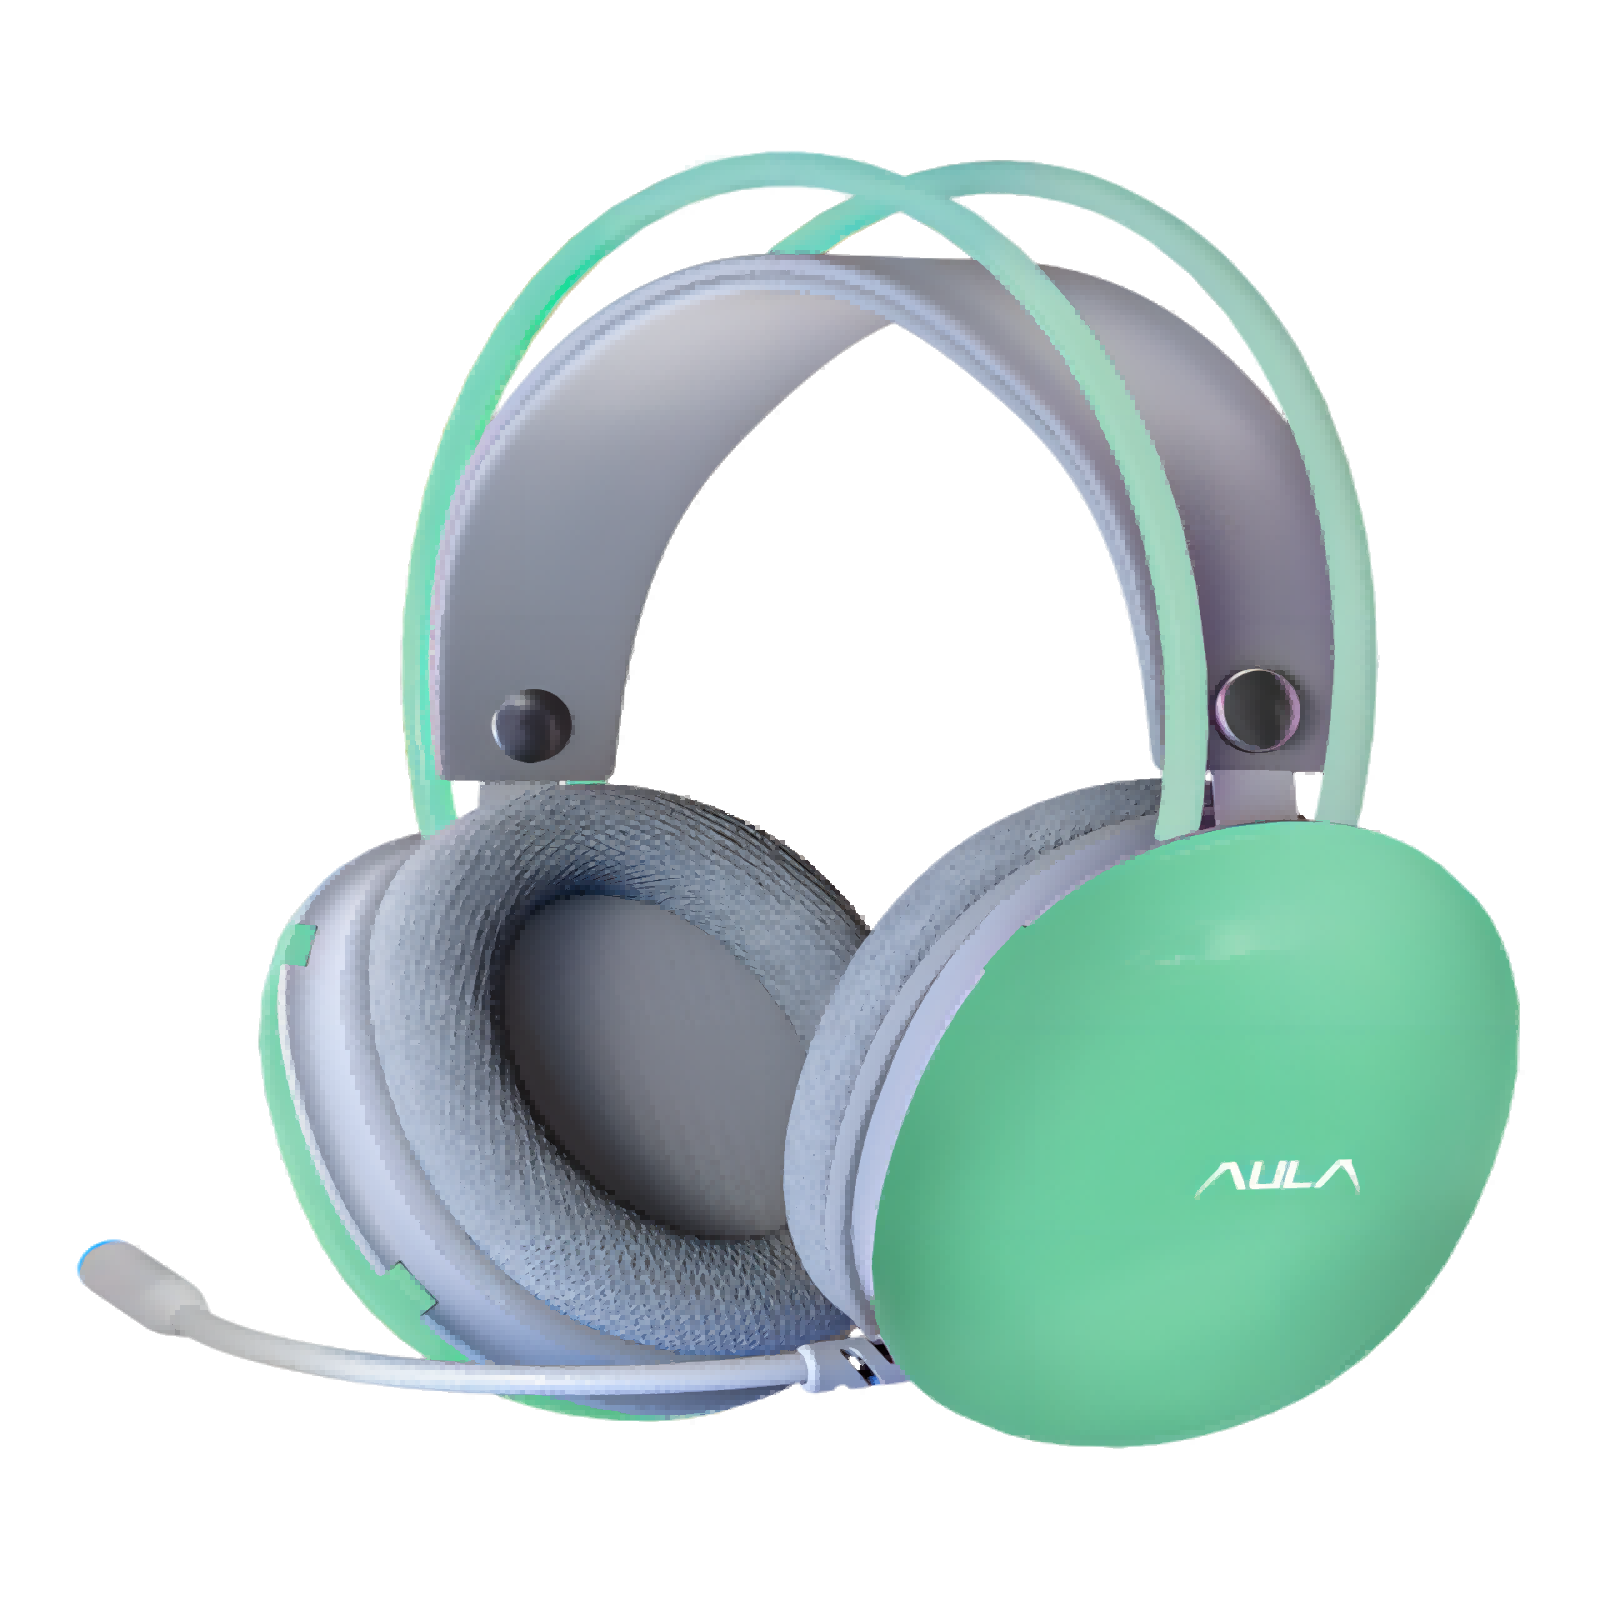 AULA S505 transparent gaming headset